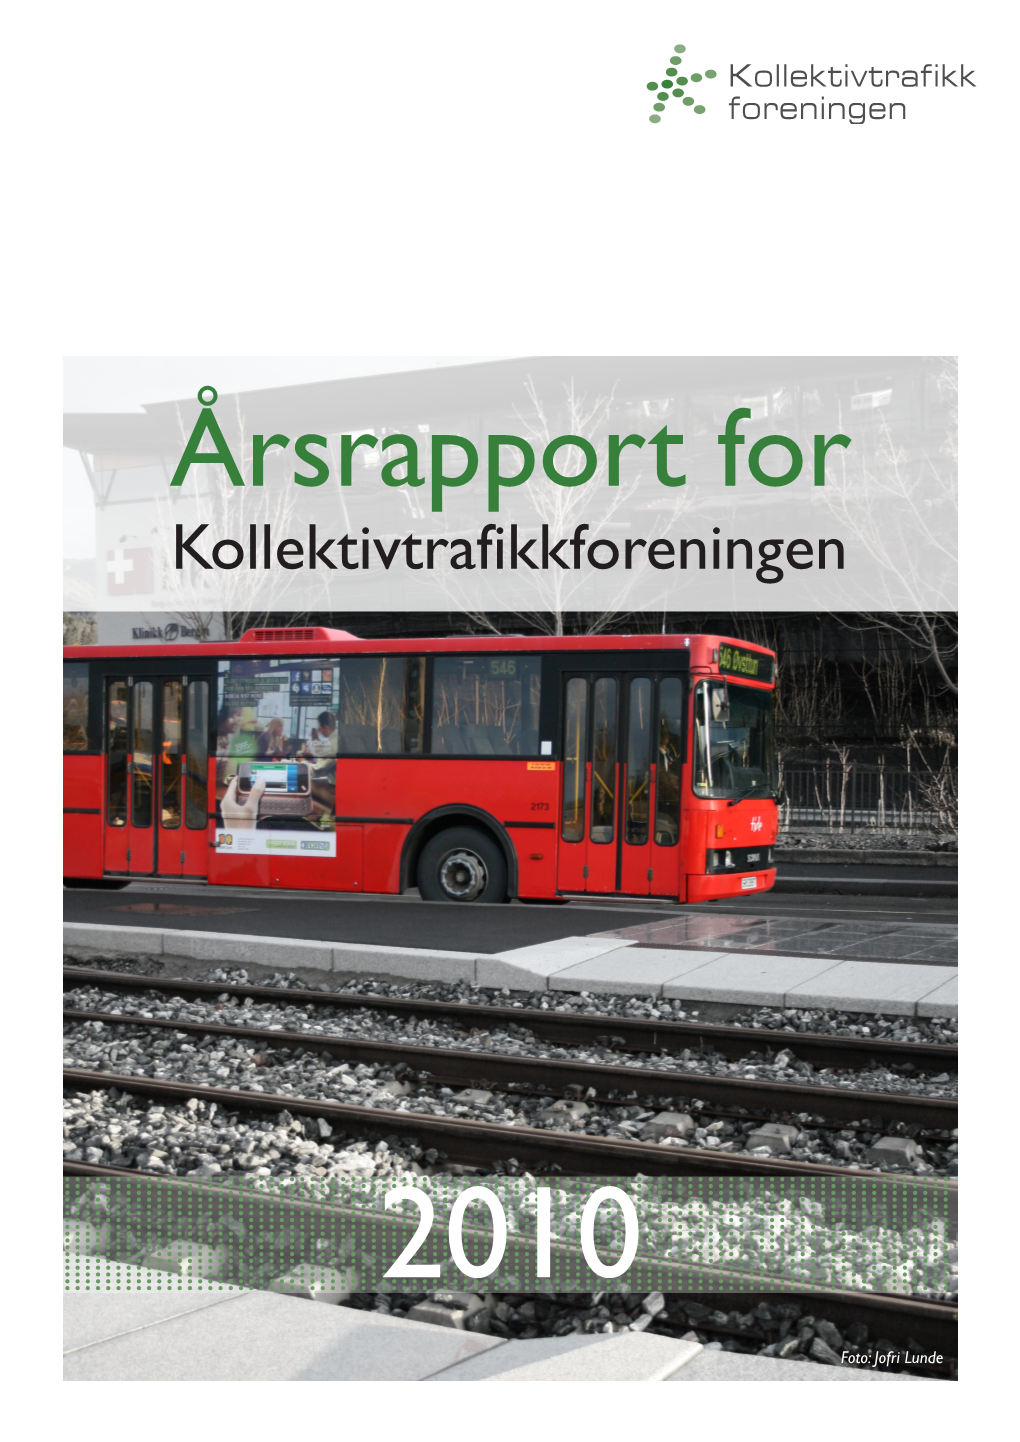 Årsrapport for Kollektivtrafikkforeningen